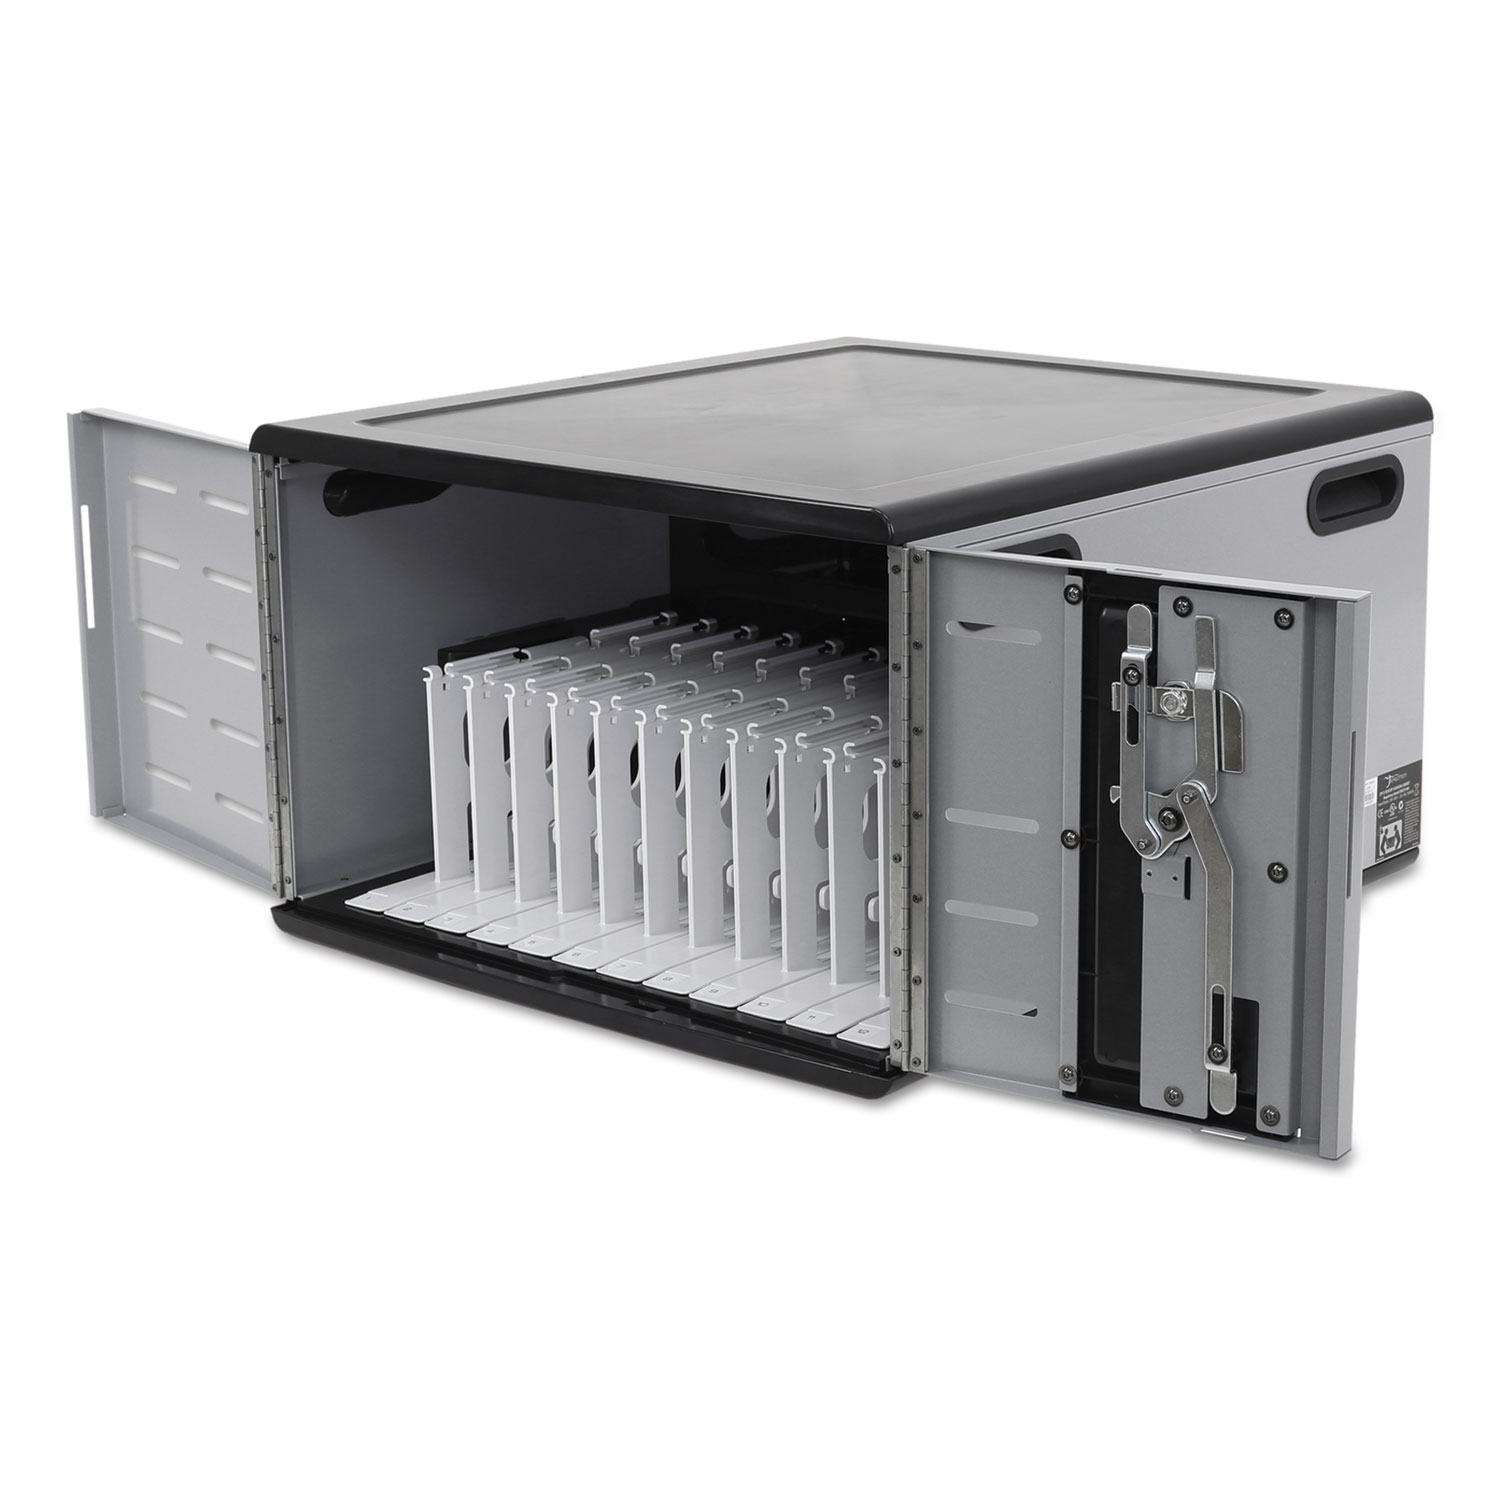  Ergotron DM12-1012-1 Zip12 Desktop Charging Cabinet for 8-12 Devices, 22 x 24.5 x 14, Black/Silver (ERGDM1210121) 